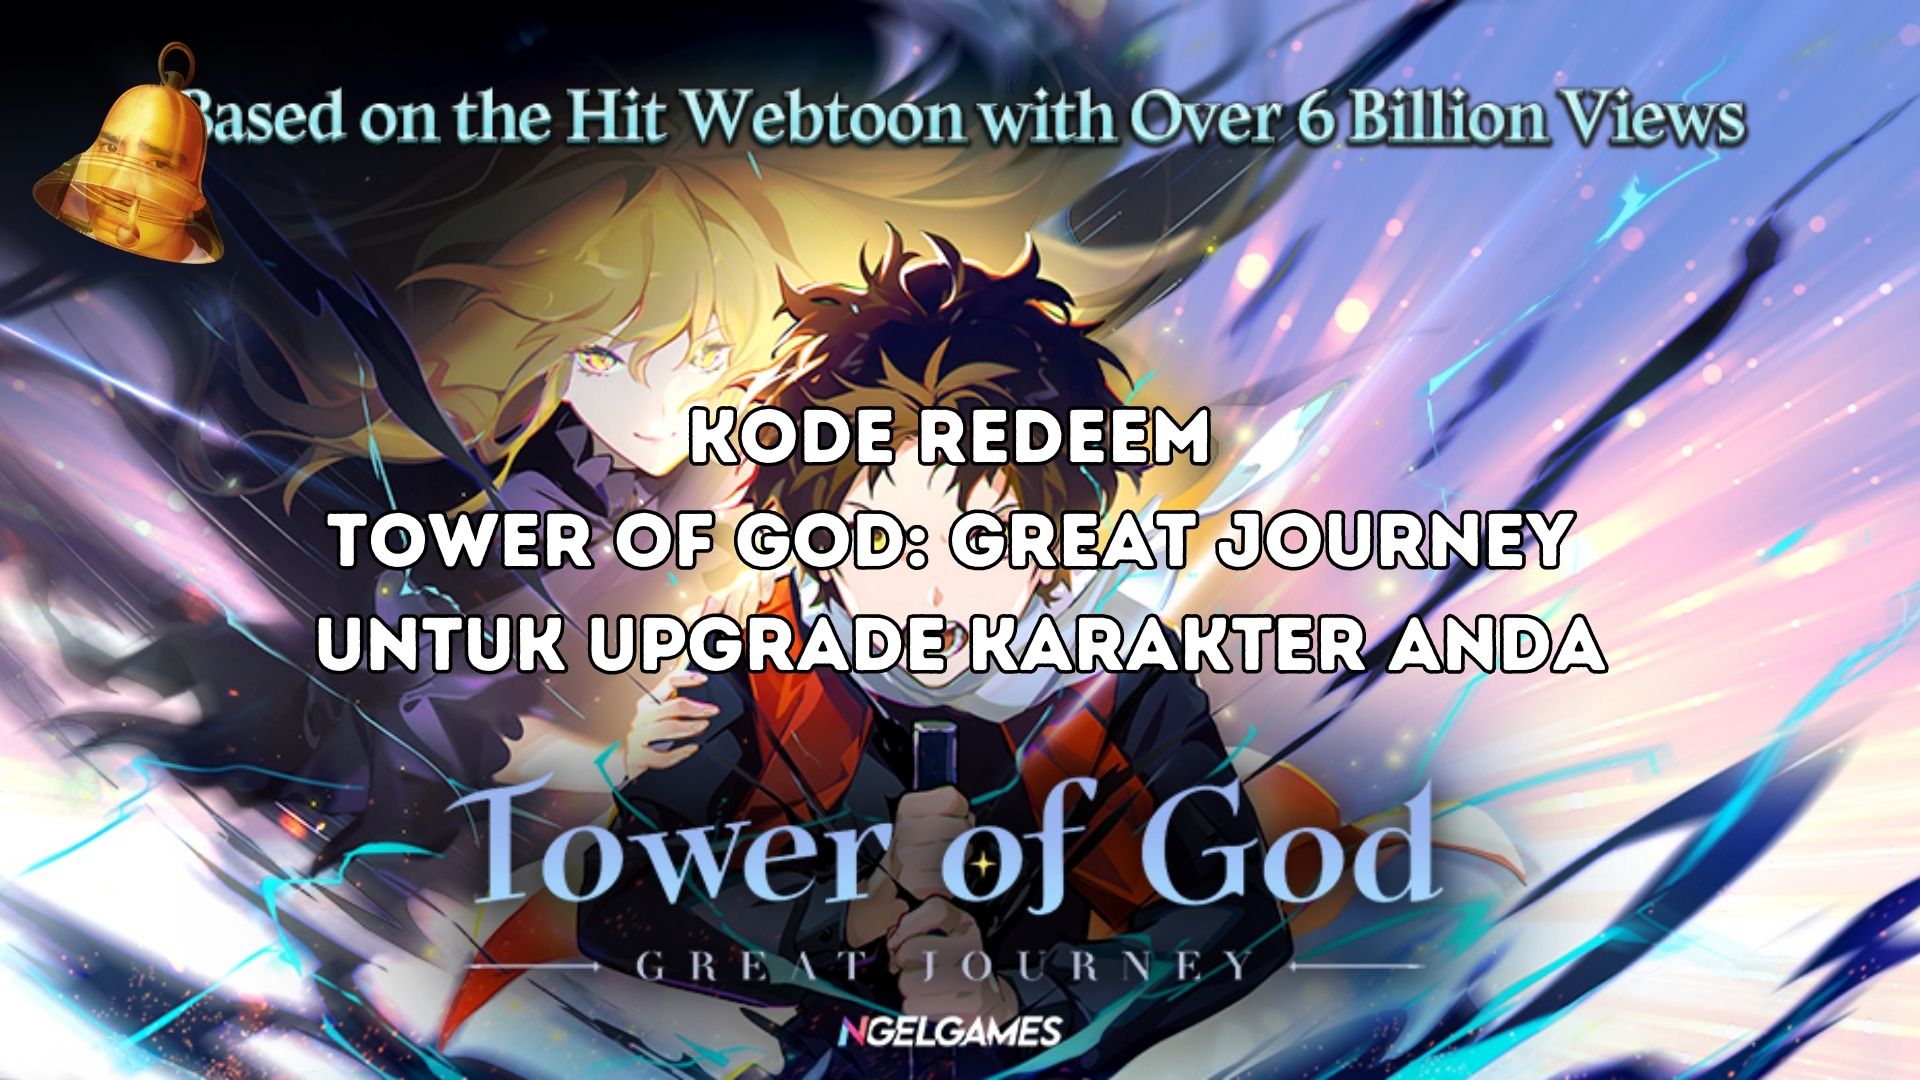 Kode Redeem Tower of God Great Journey